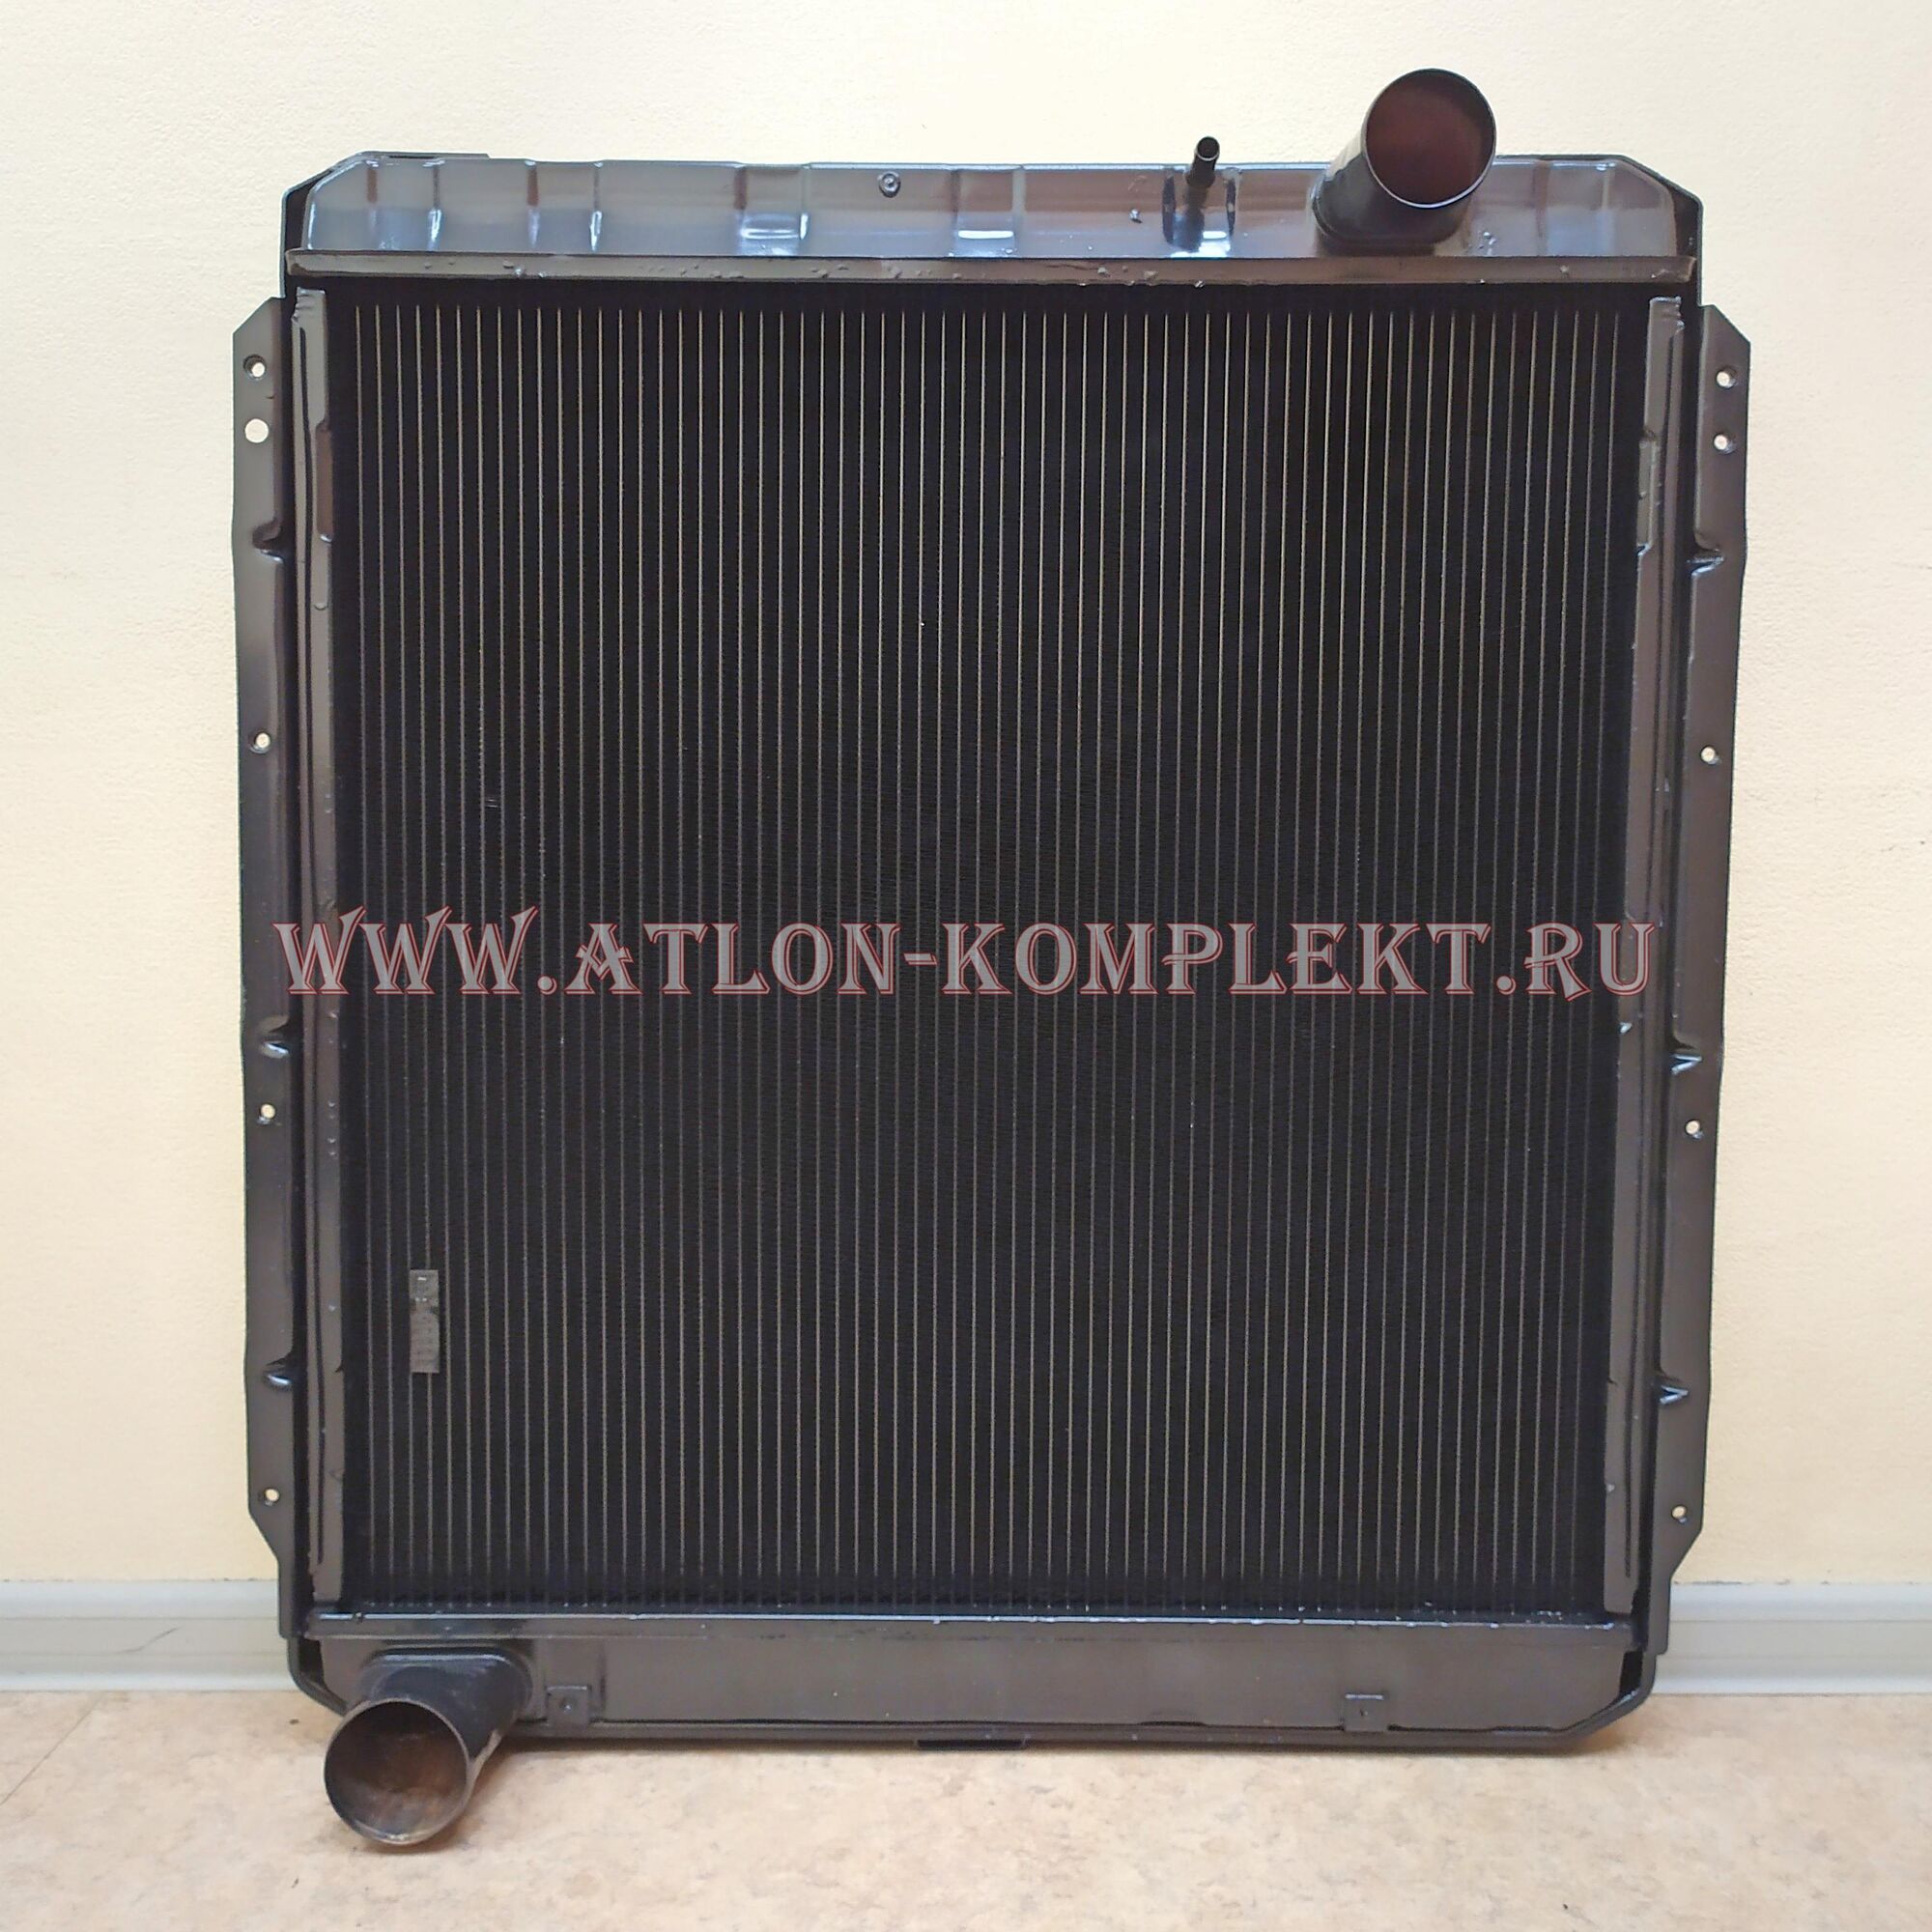 Радиатор для КАМАЗ-54115 медный 54115-1301010-10 3-х рядный